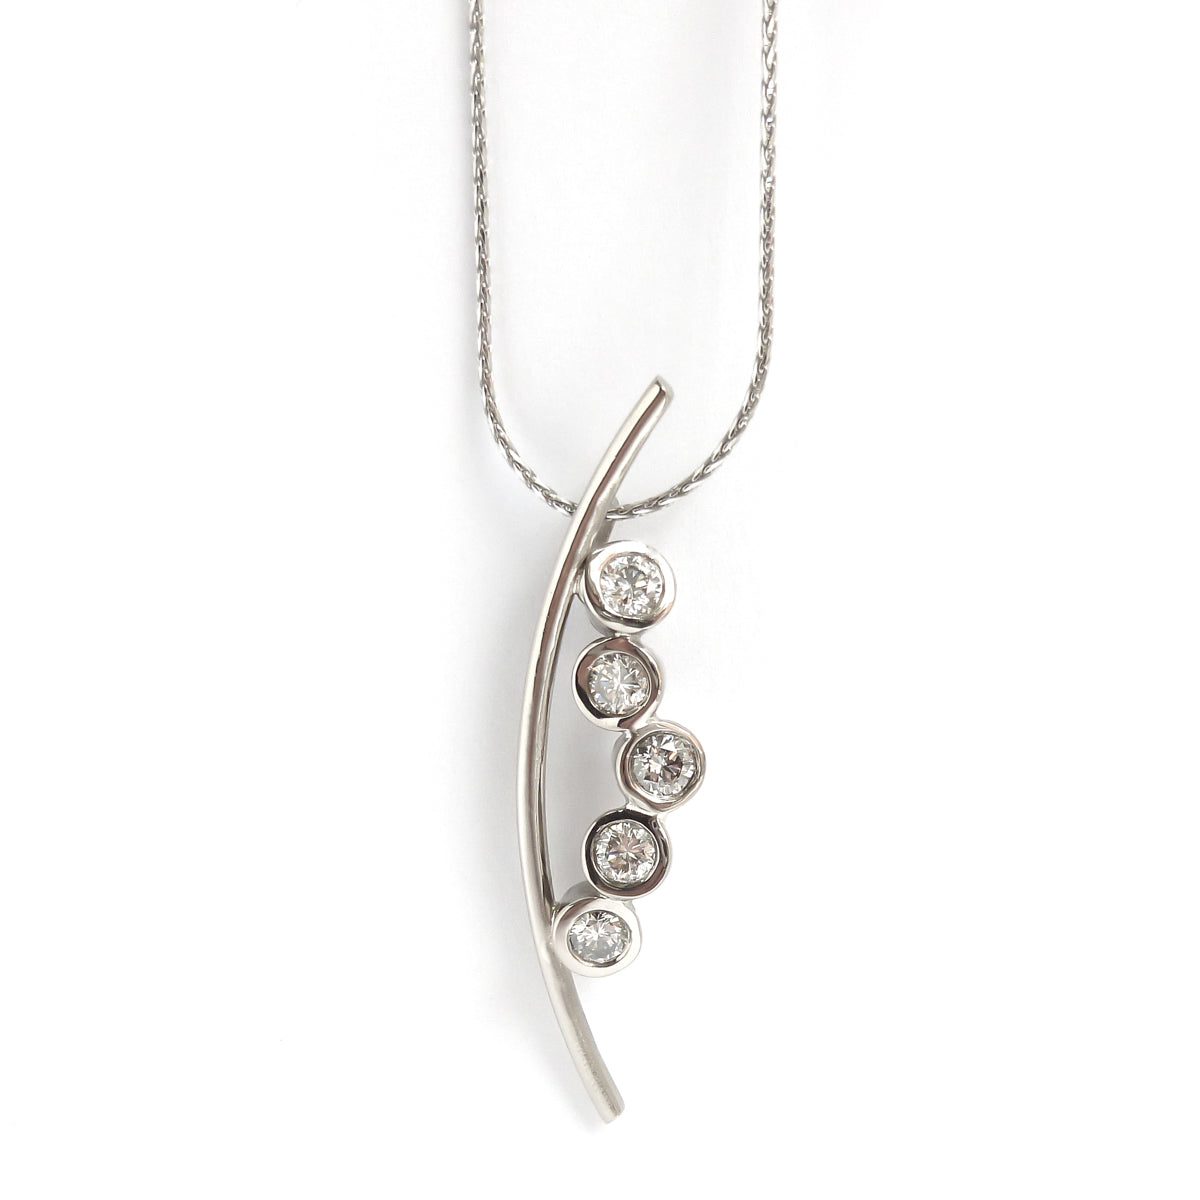 Platinum necklace, pendant, with diamonds, contemporary, bespoke, modern and unique.